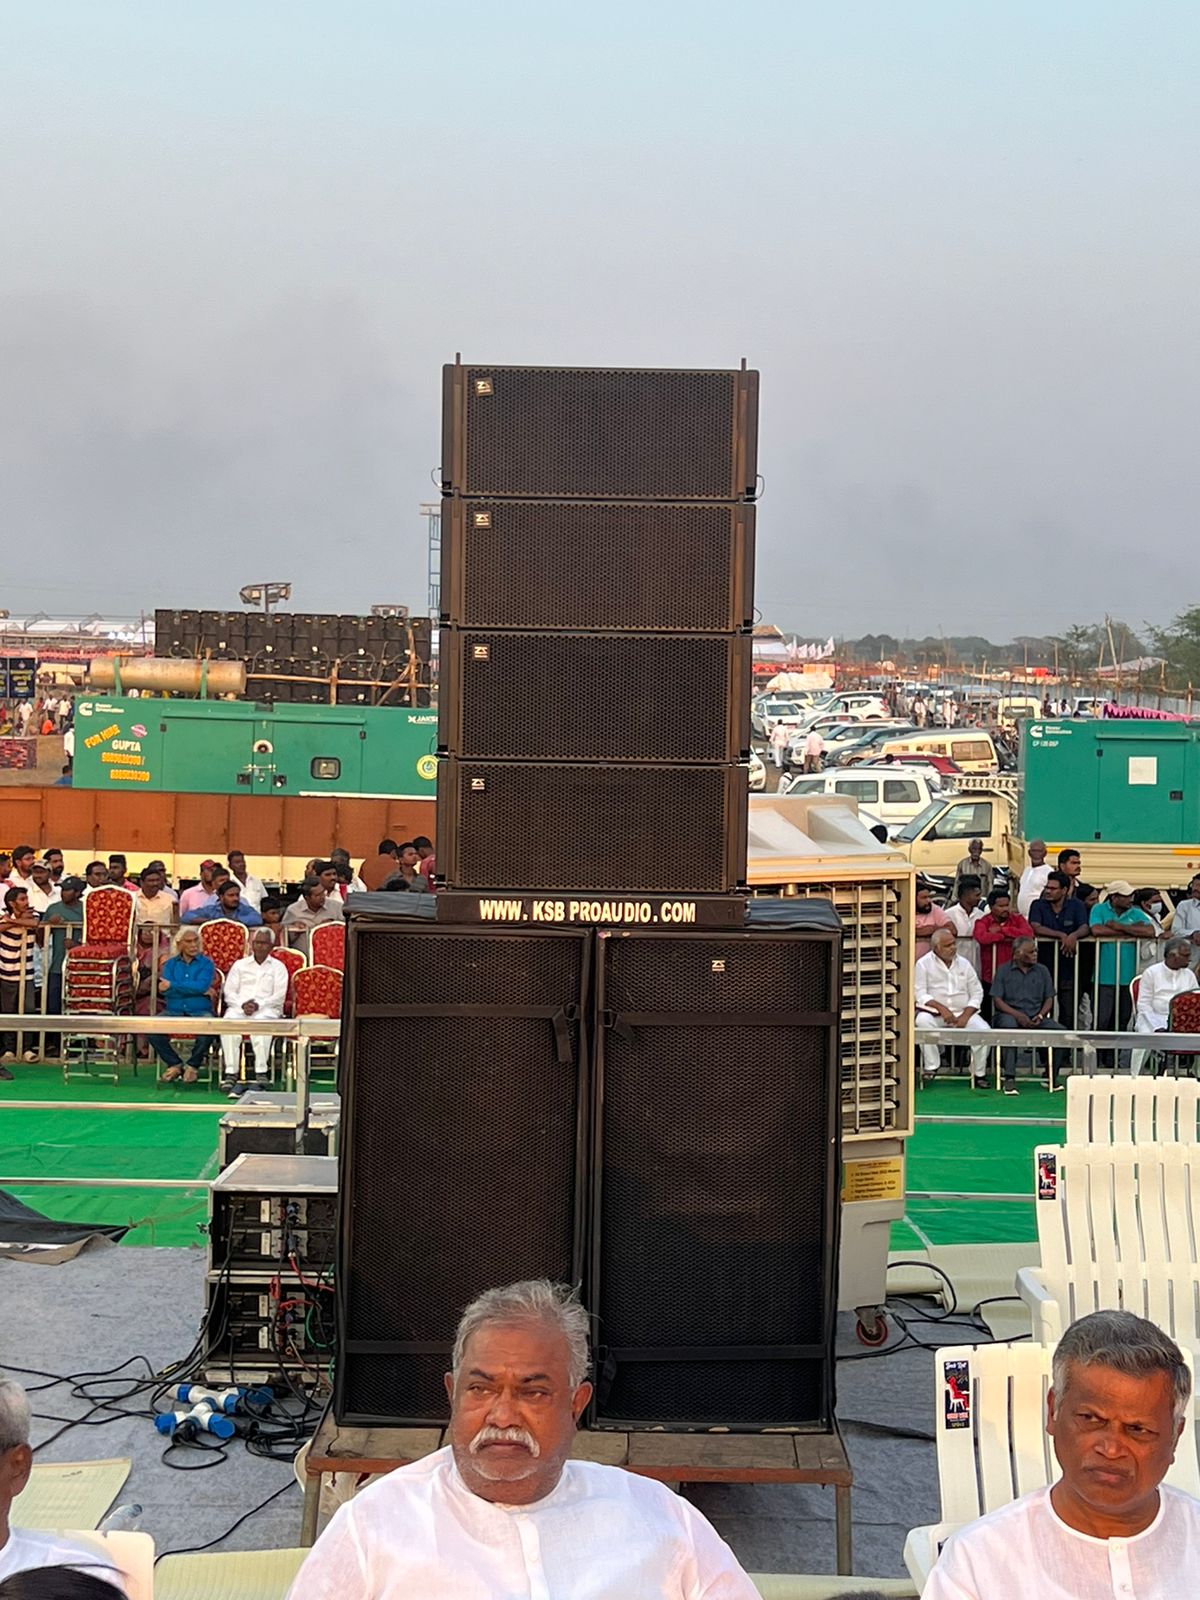 ZSOUND provided sound equipment for the Hosanna Ministry's Gudarala Panduga event in Guntur